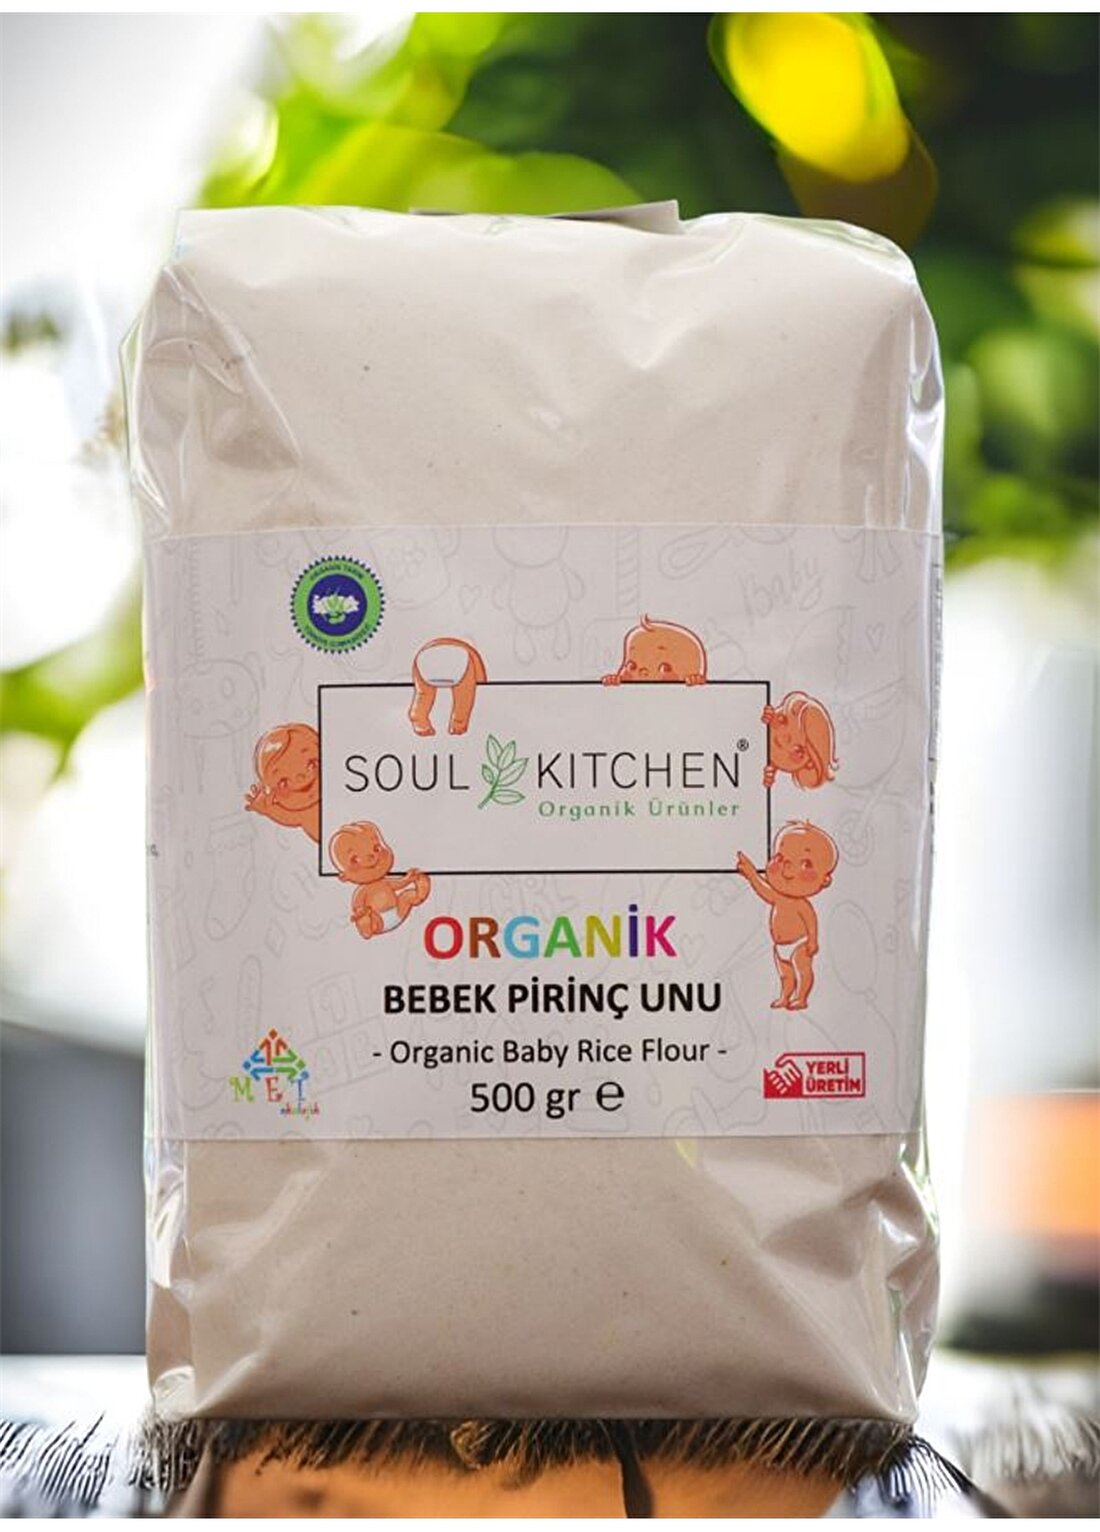 Soul Kitchen Organik Bebek Pirinç Unu 500Gr